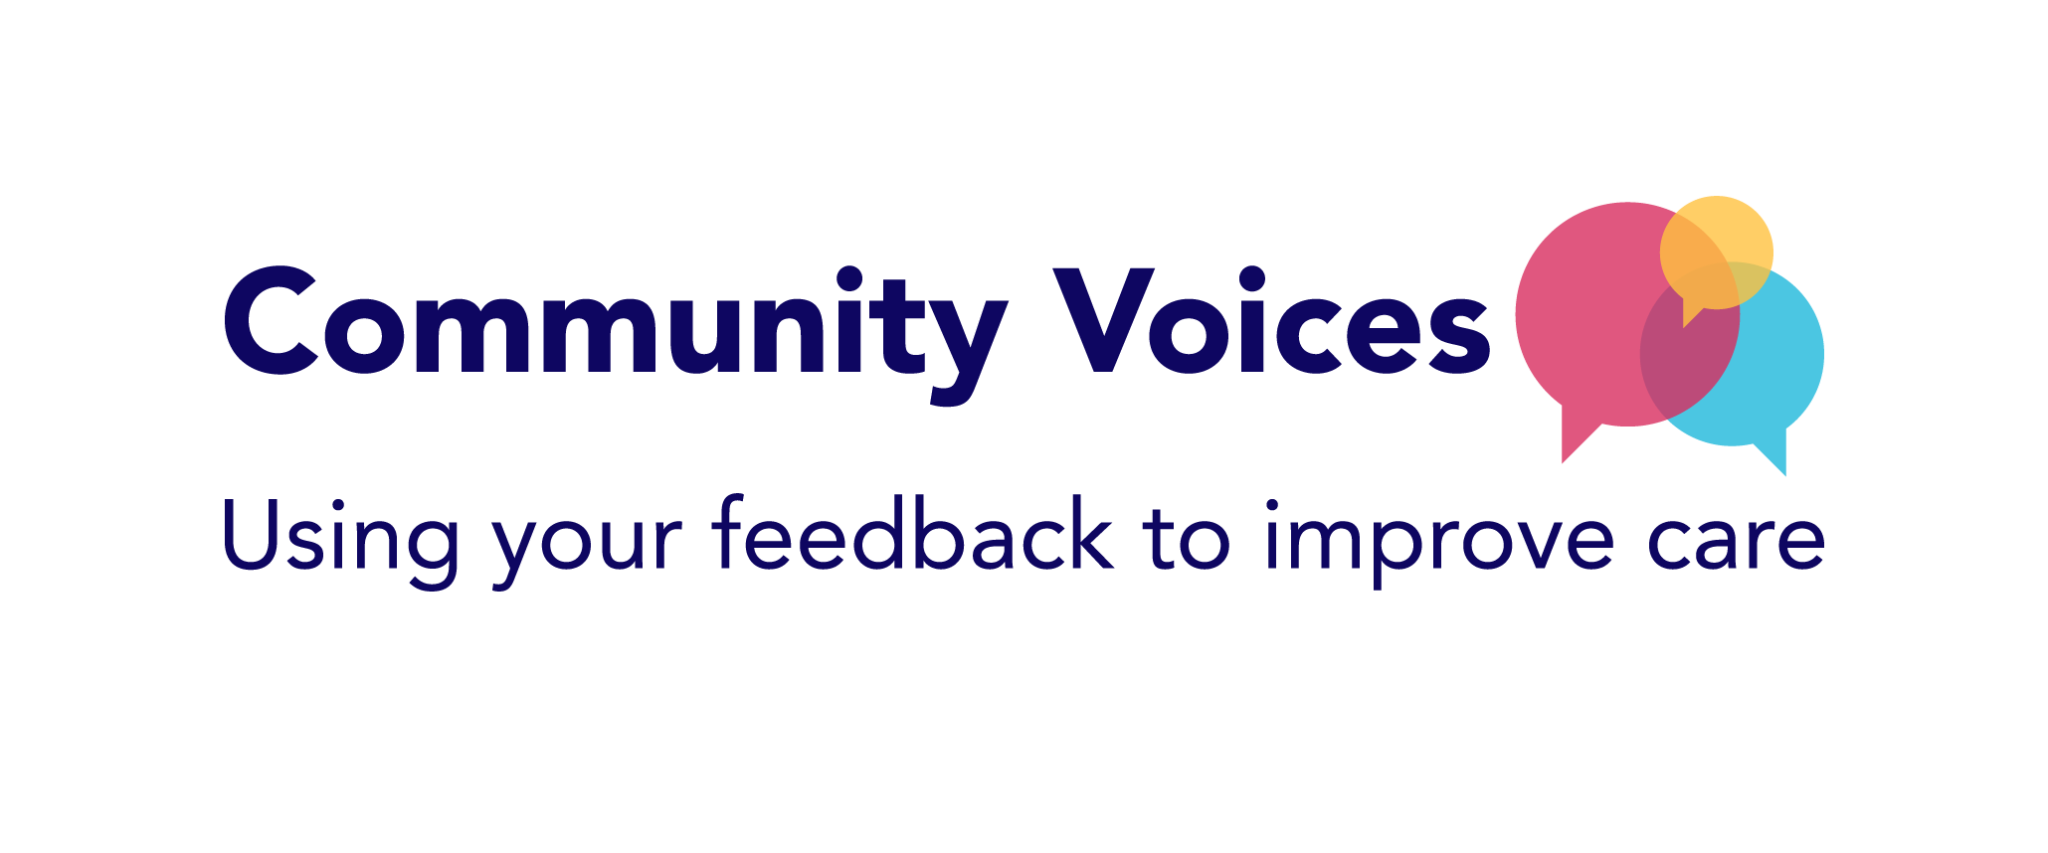 Community Voices Norfolk And Waveney Ics